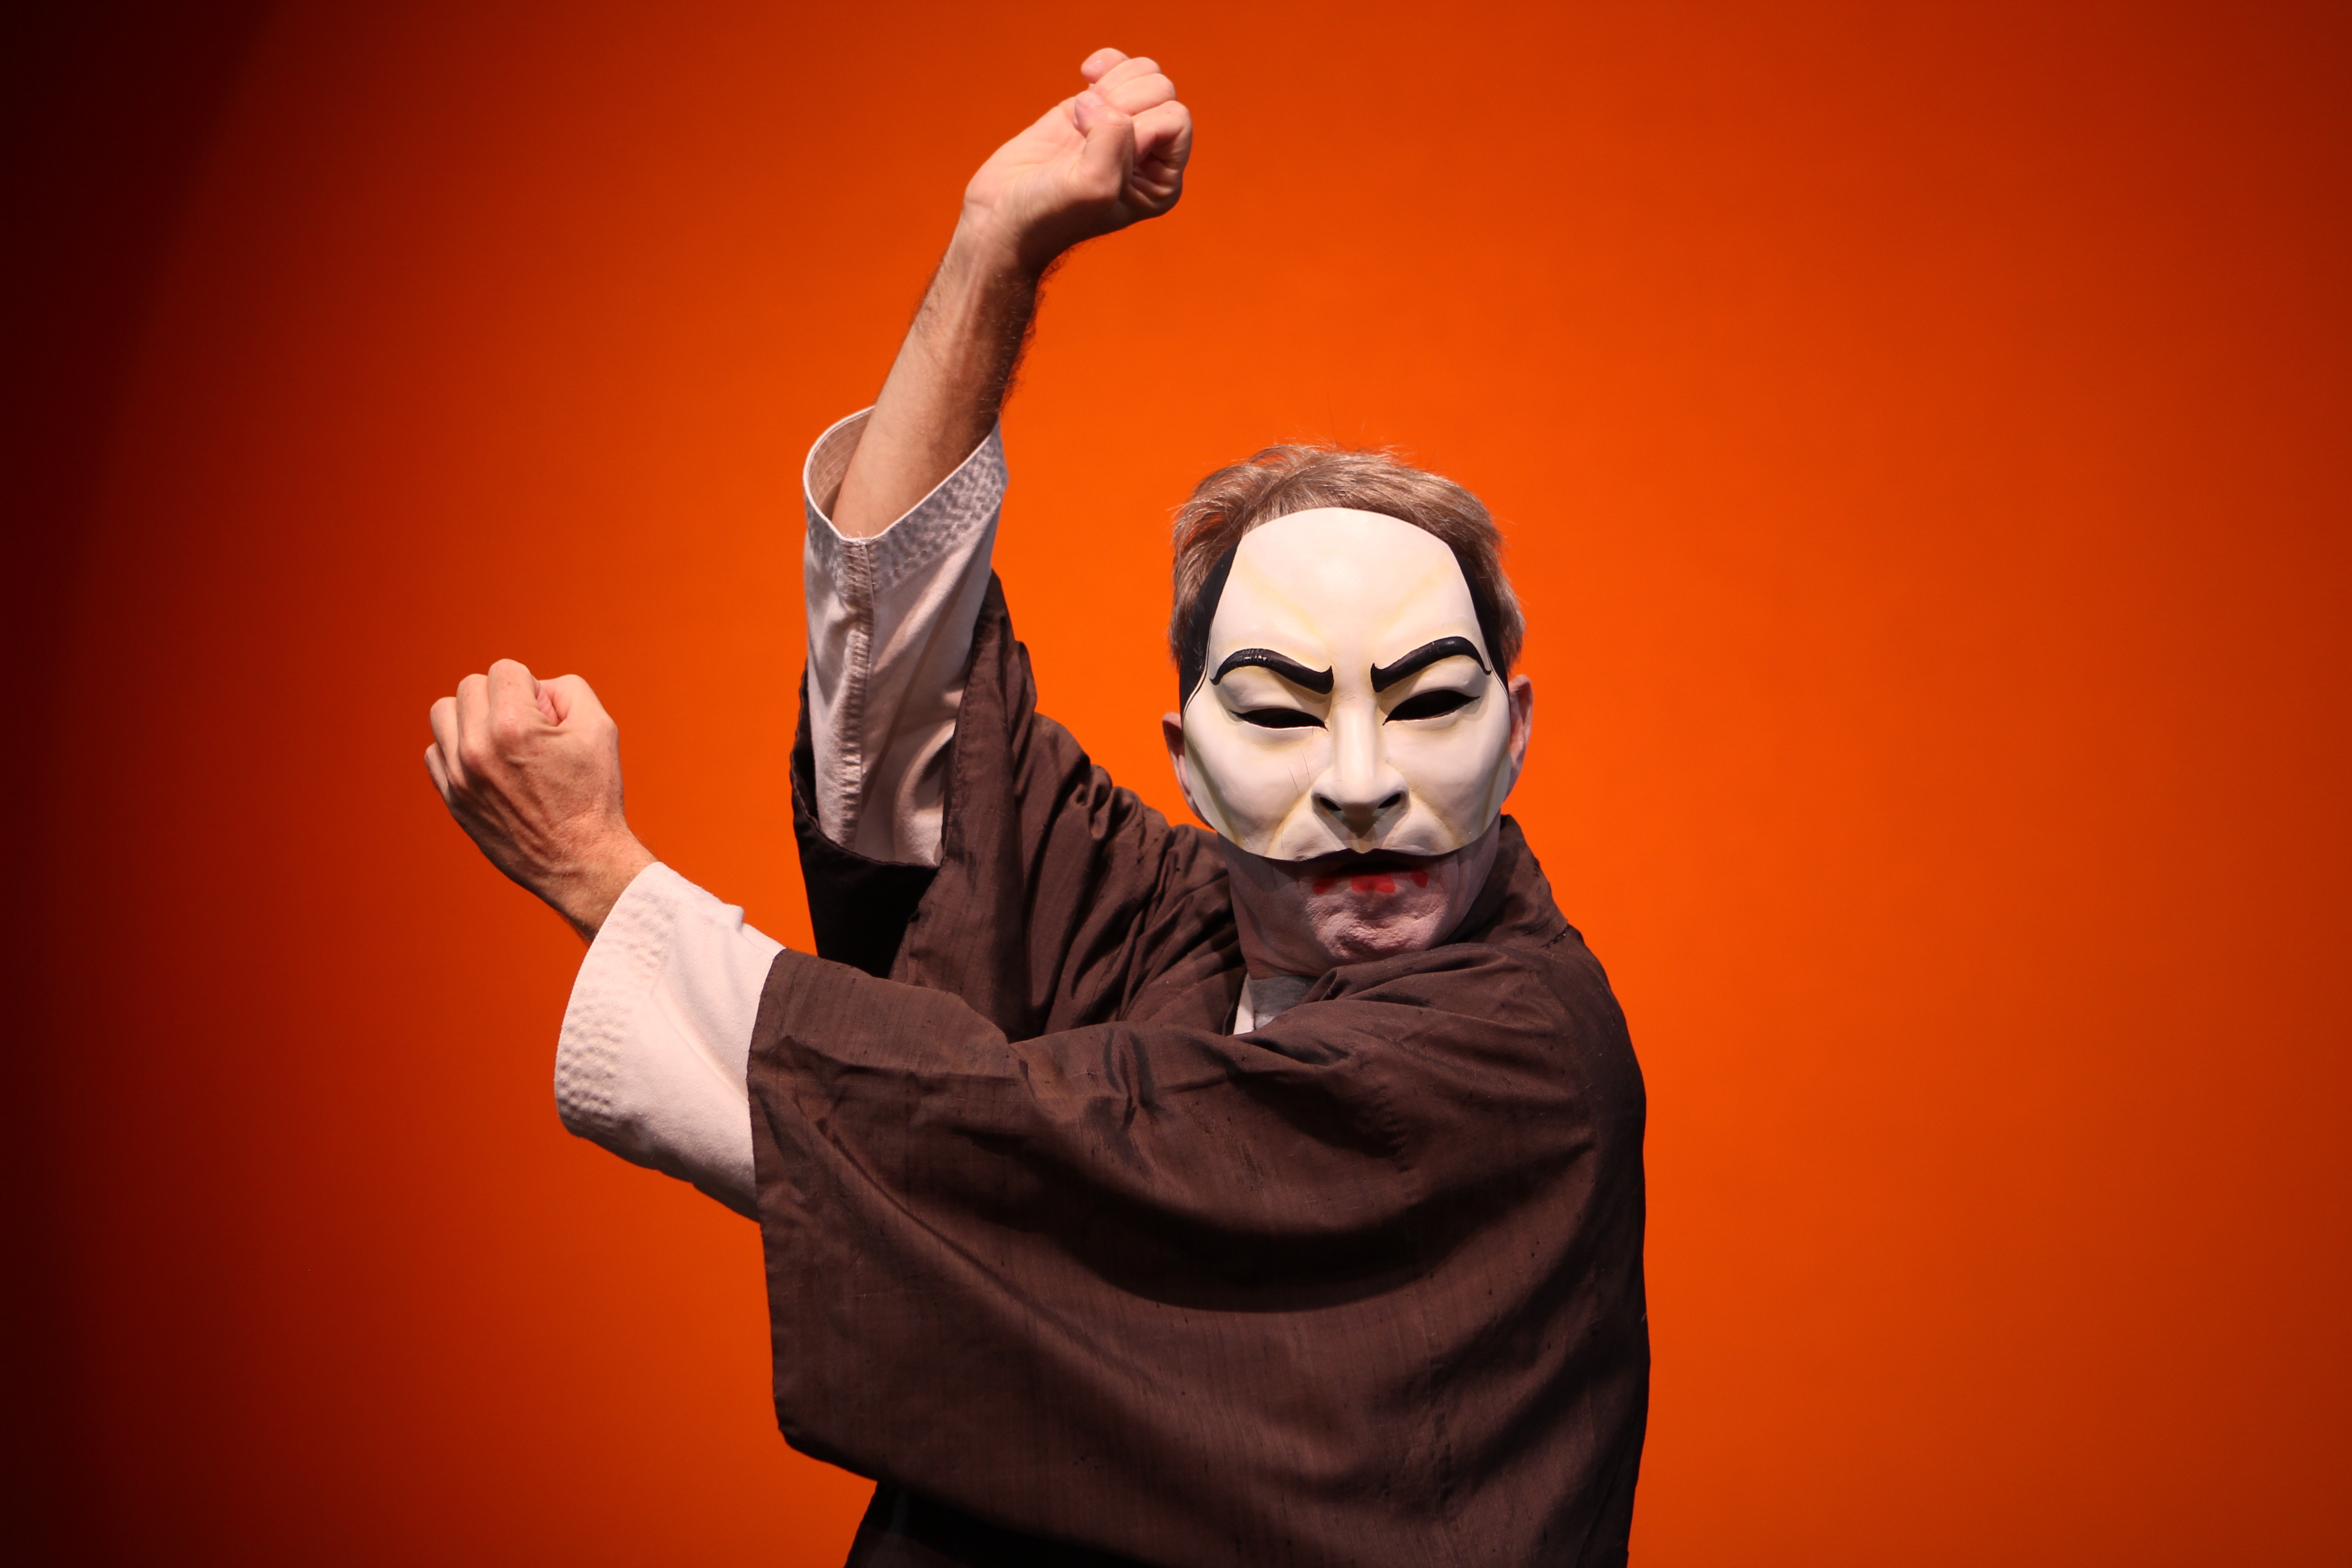 Samurai mask in nunchuck pose, orange packground